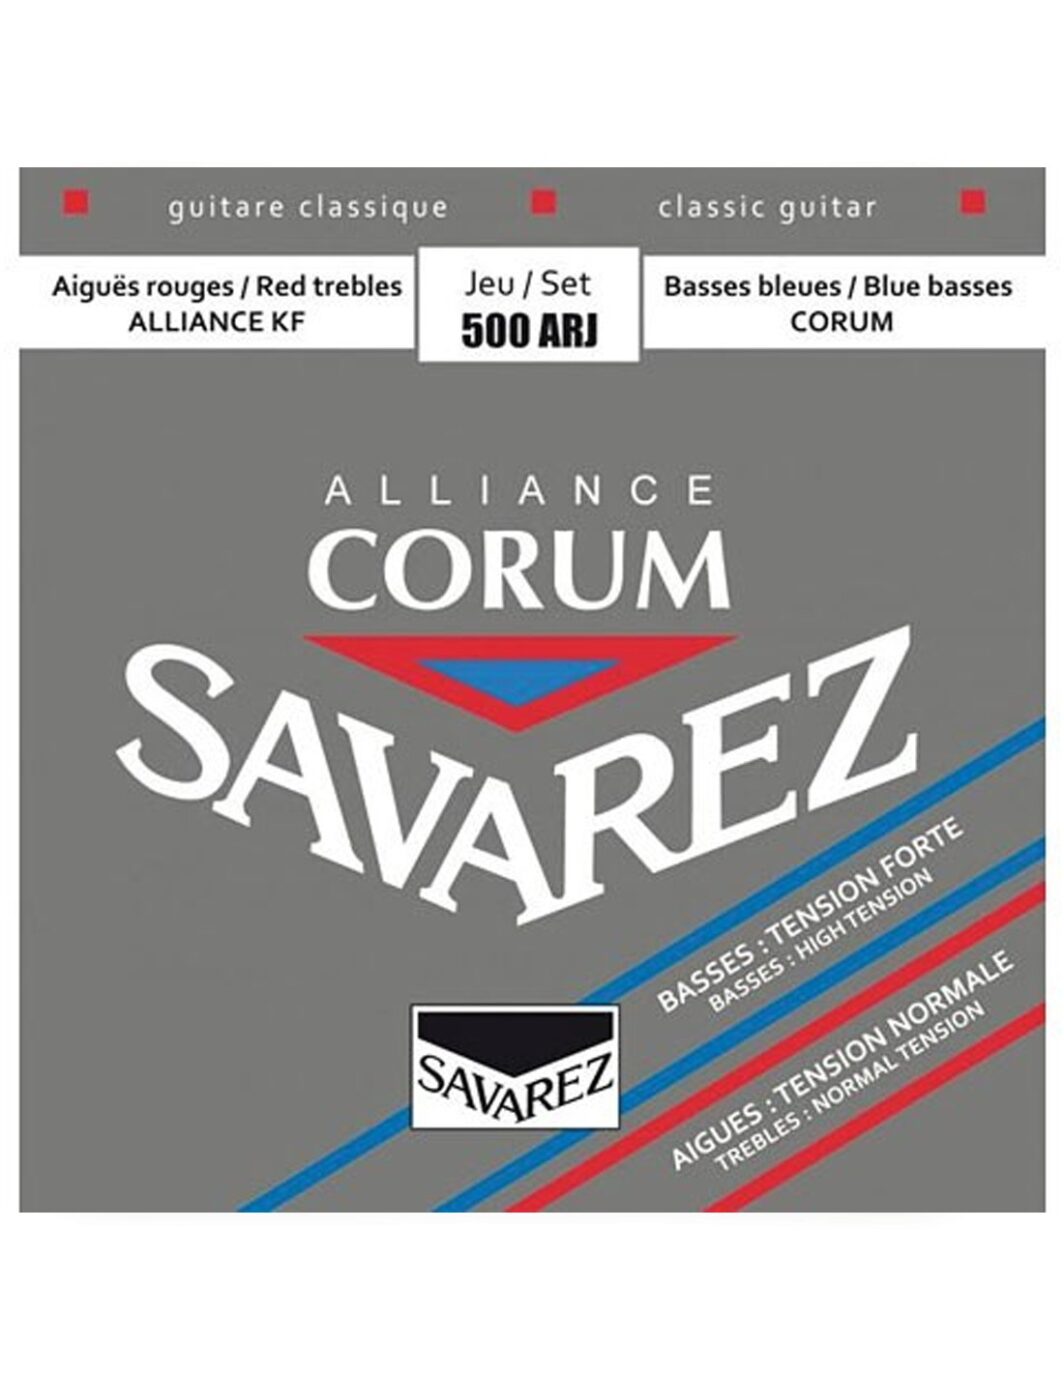 Savarez Corum Alliance 500 ARJ Chitarra Classica